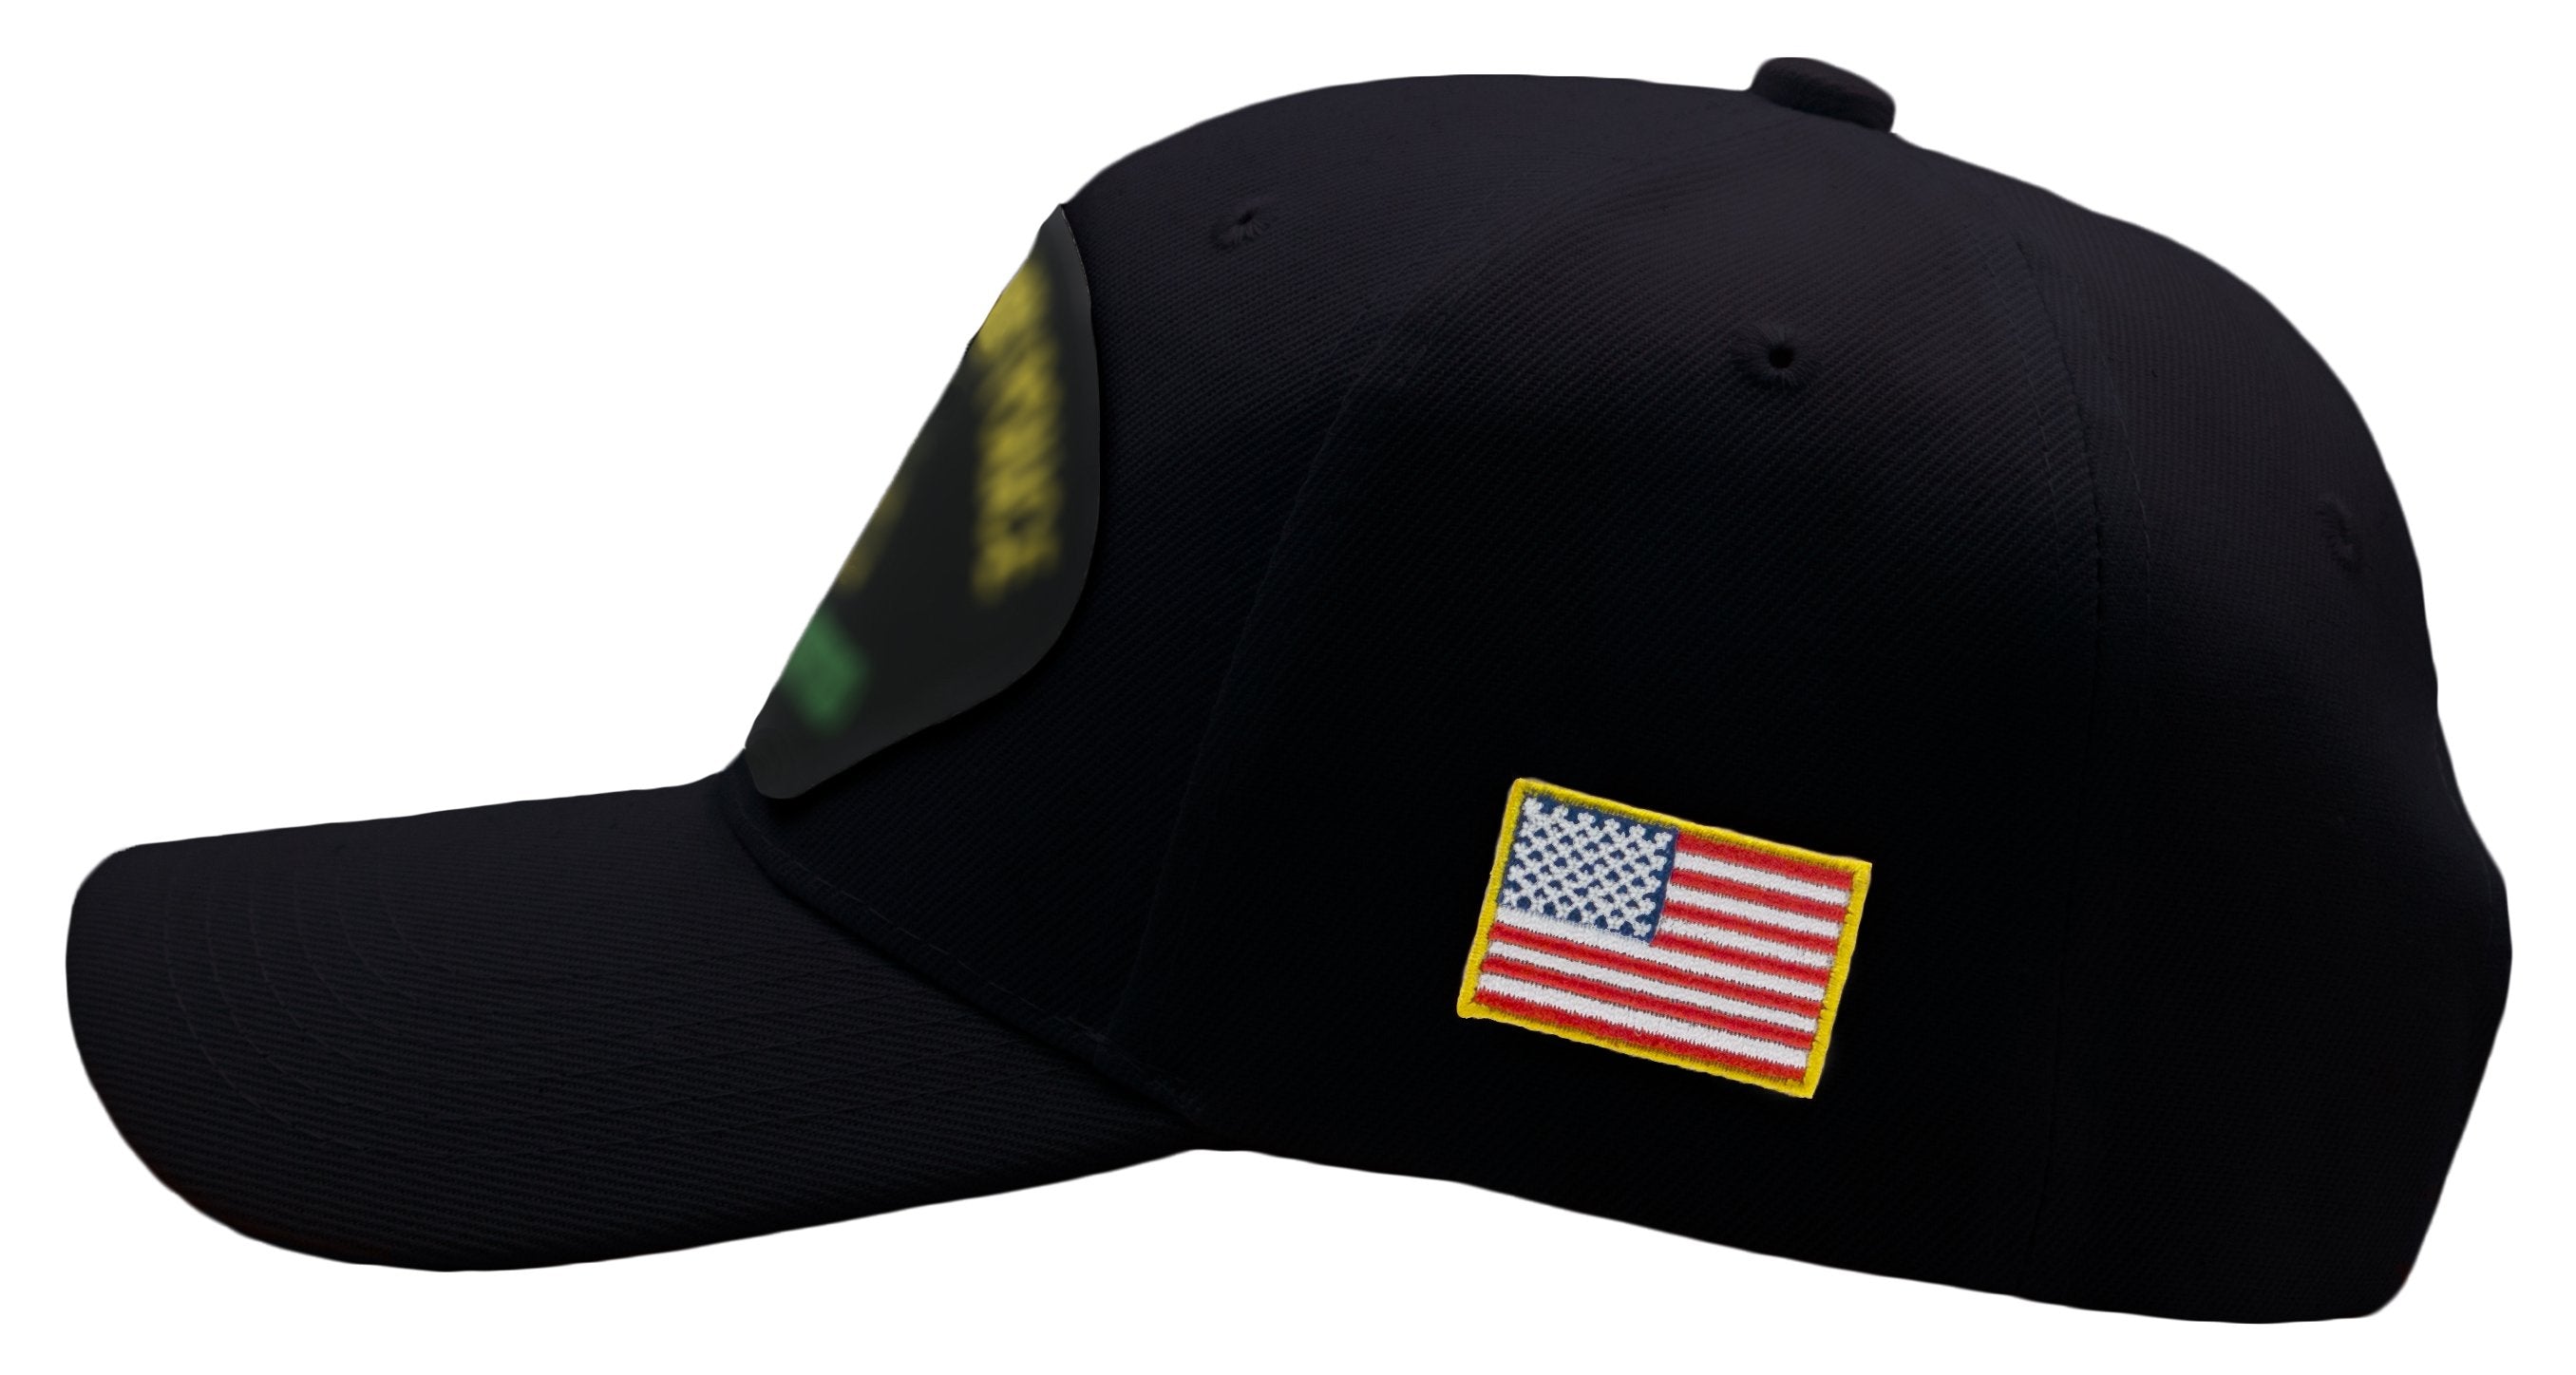 US Navy Seabee - Vietnam War Veteran Hat - Multiple Colors Available